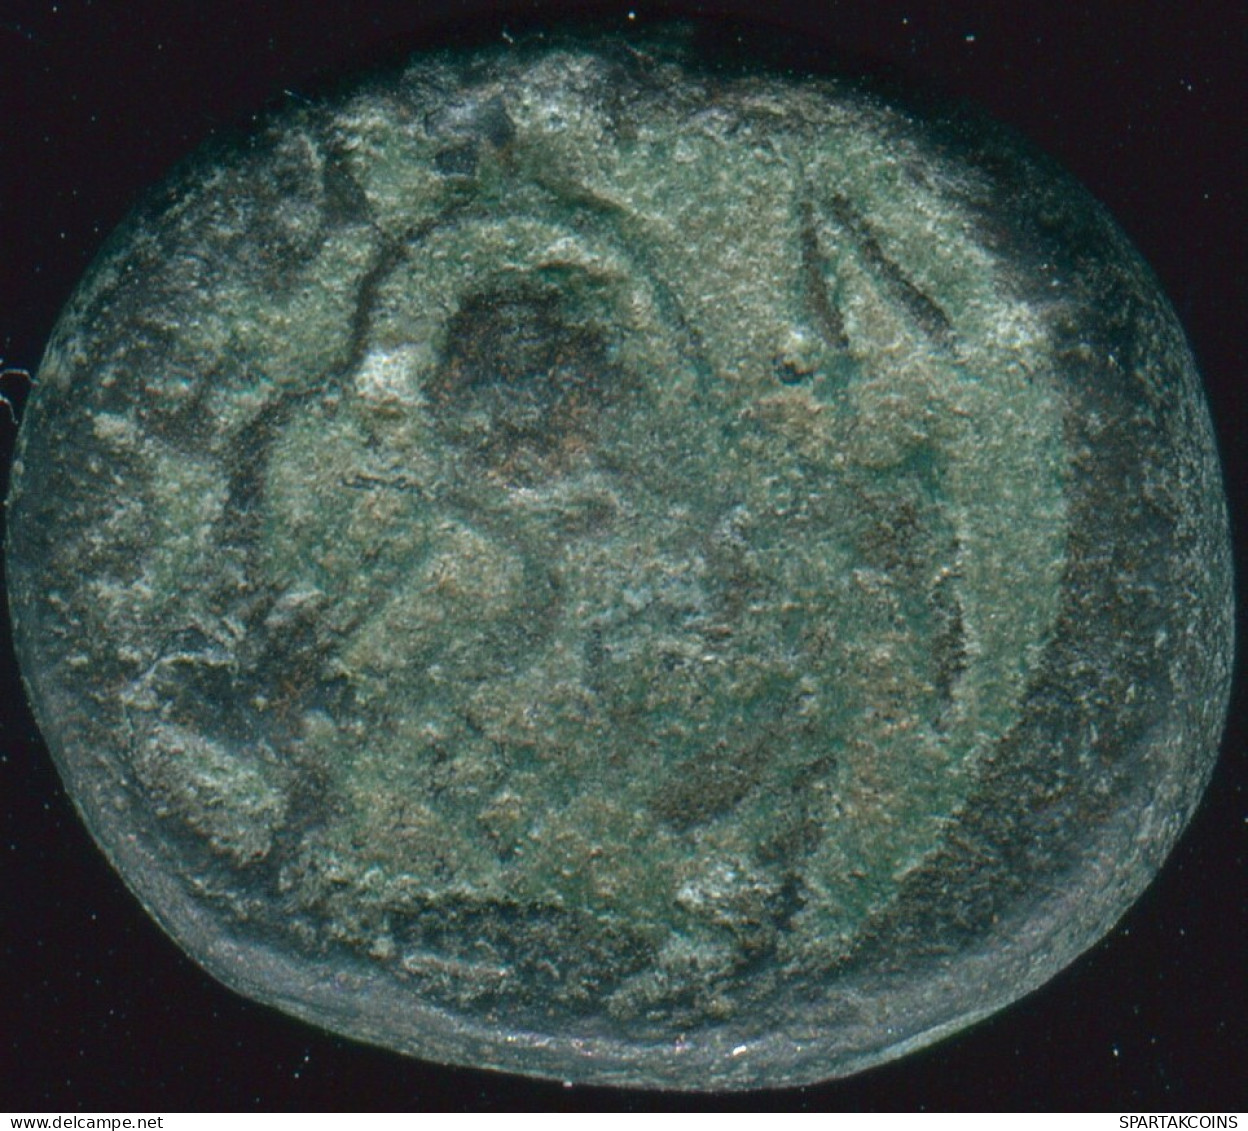 Antike Authentische Original GRIECHISCHE Münze 3.3g/14.8mm #GRK1406.10.D.A - Greek